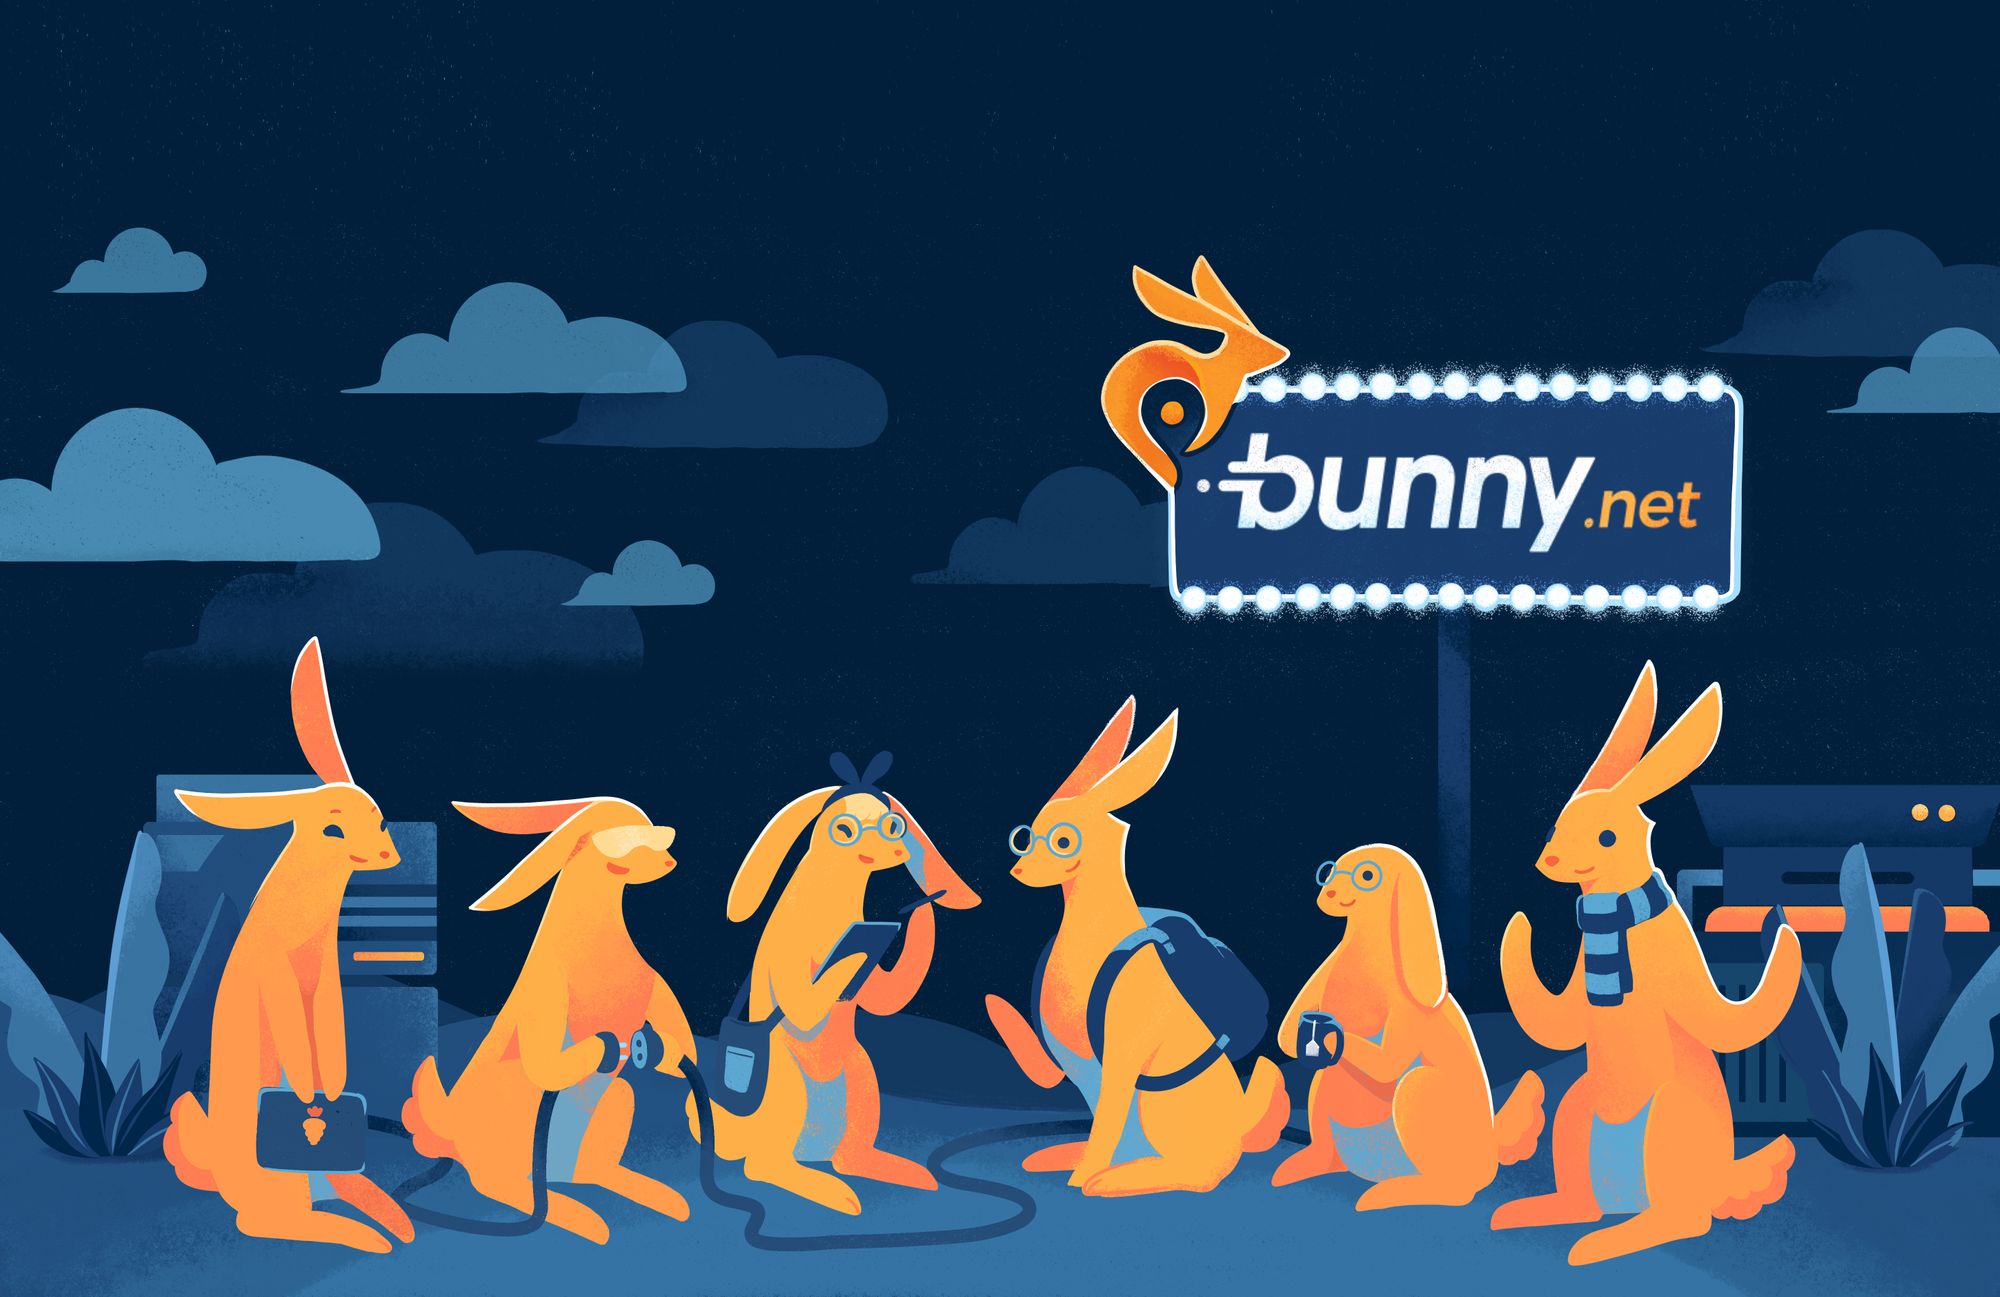 BunnyCDN is evolving! Introducing bunny.net!